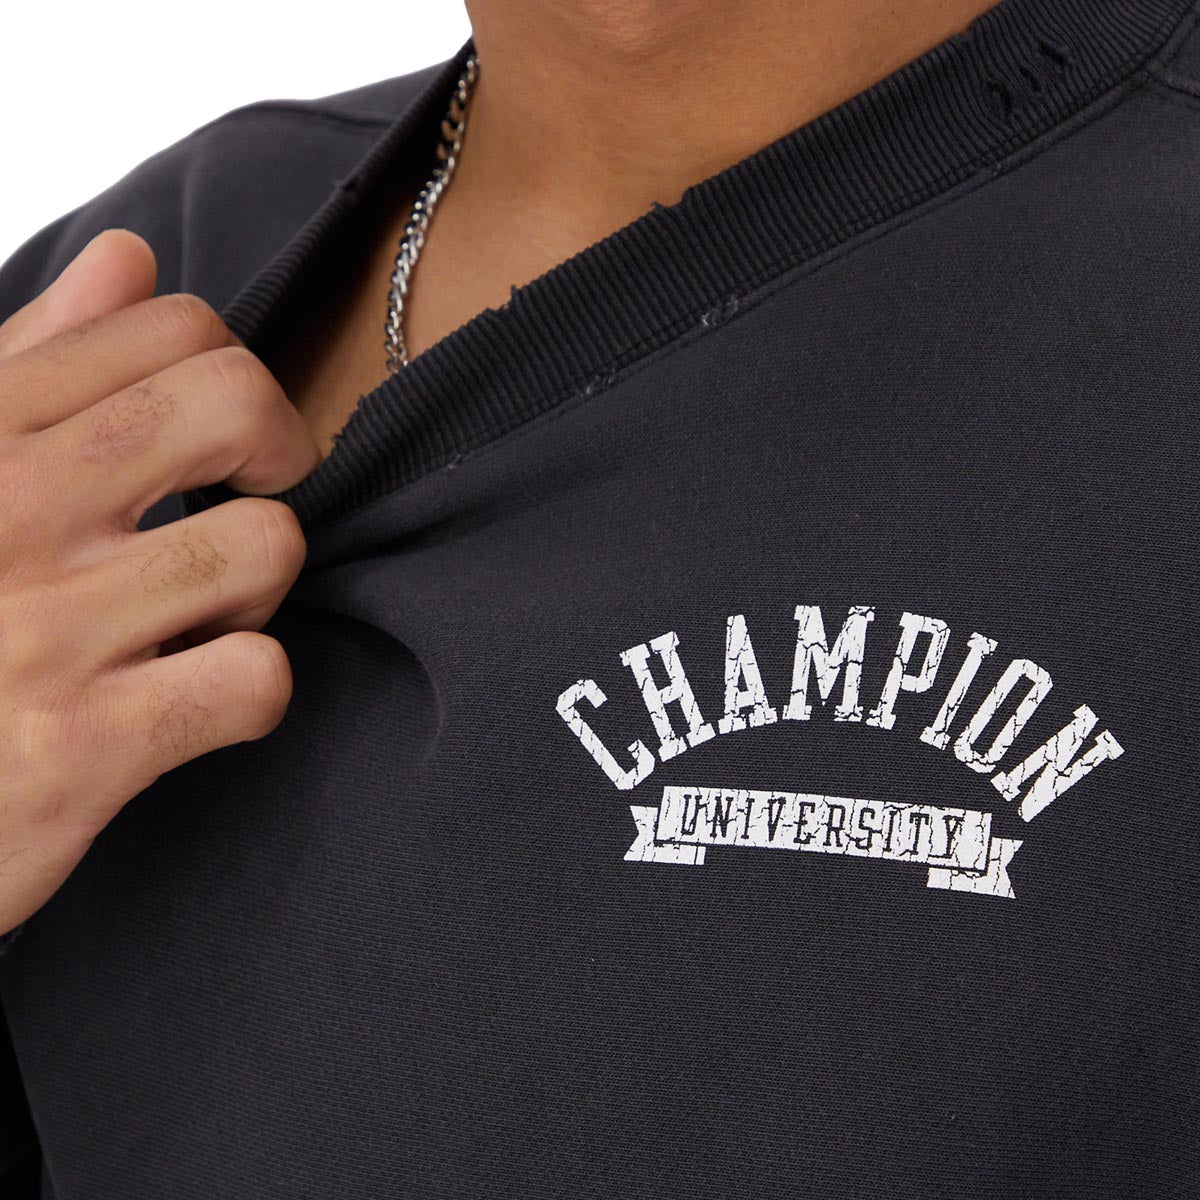 Champion RW OS Crew Time Capsule Enzyme Sweatshirt - Black image 4